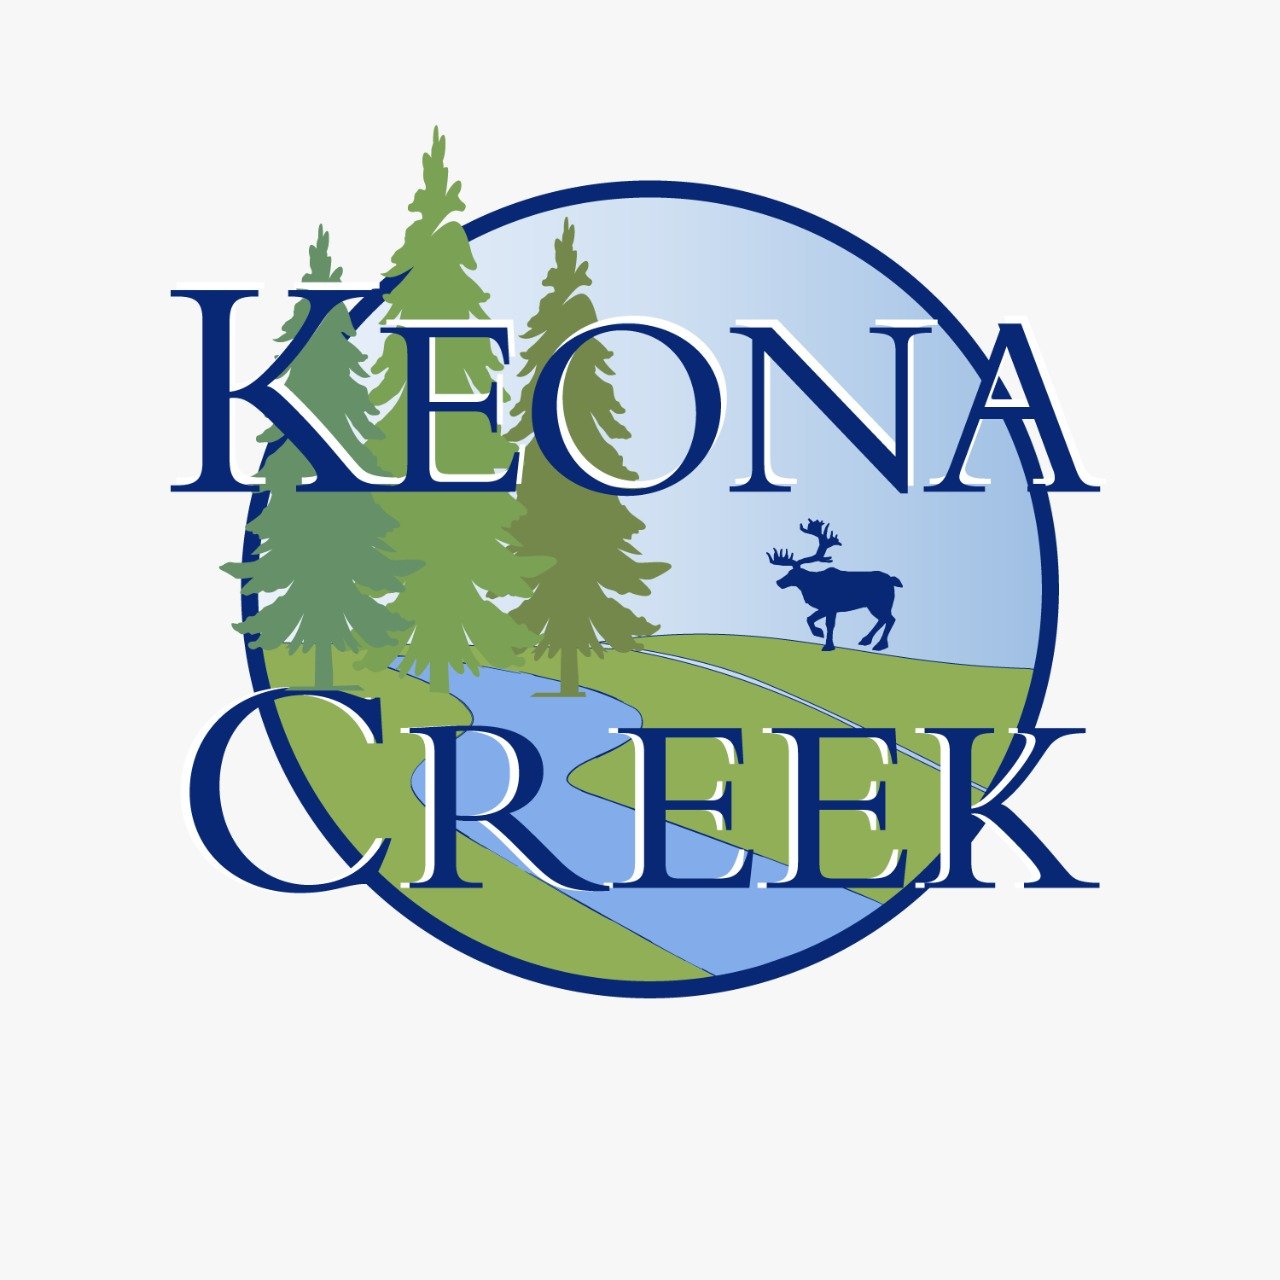 Keona Creek, LLC Logo